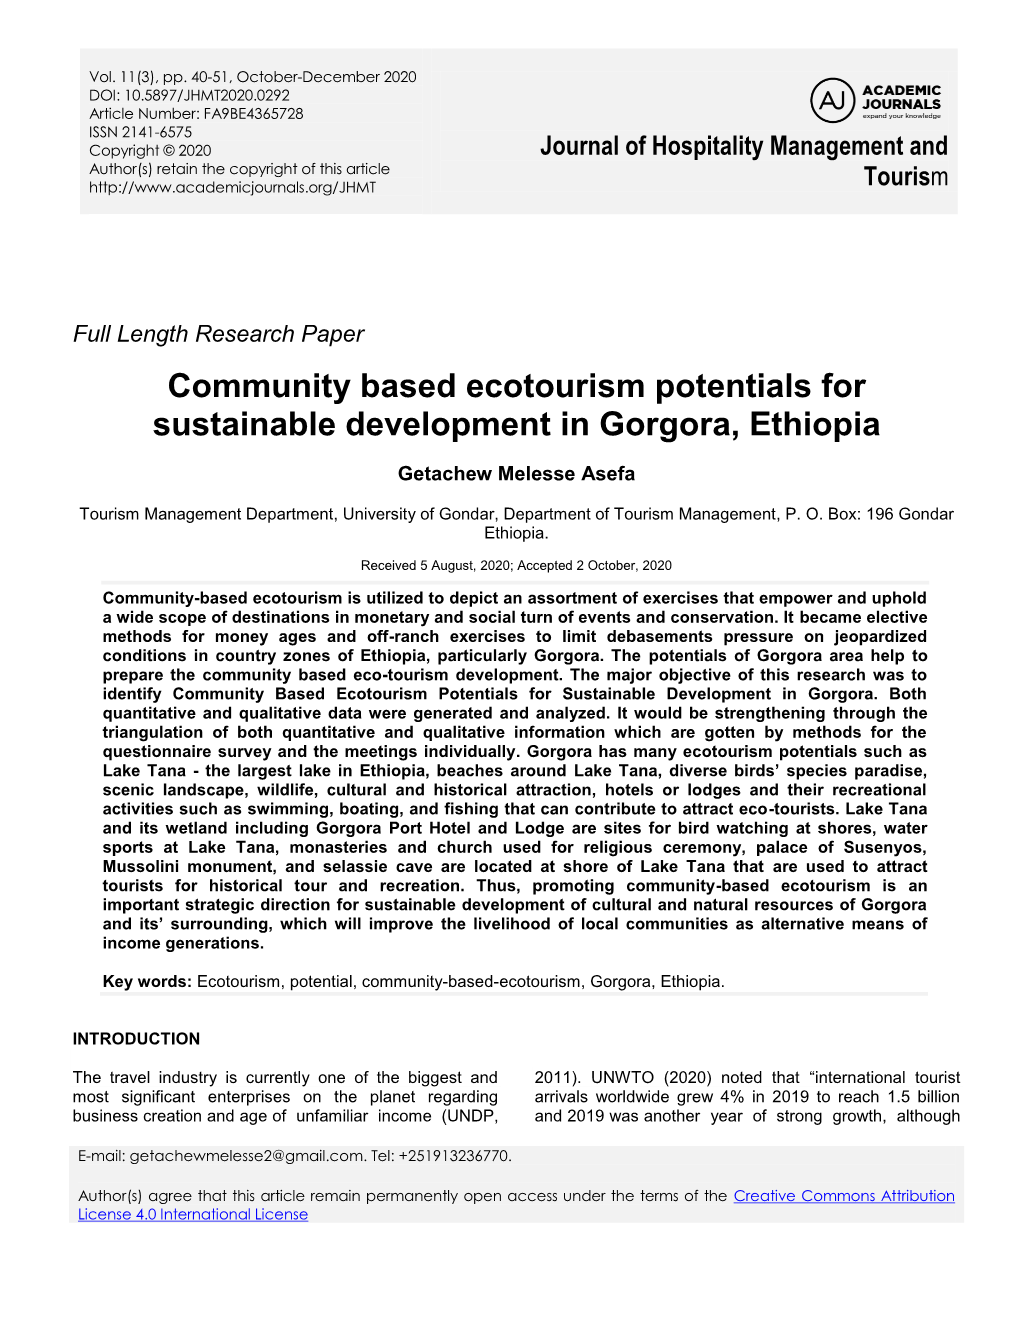 Community Based Ecotourism Potentials for Sustainable Development in Gorgora, Ethiopia